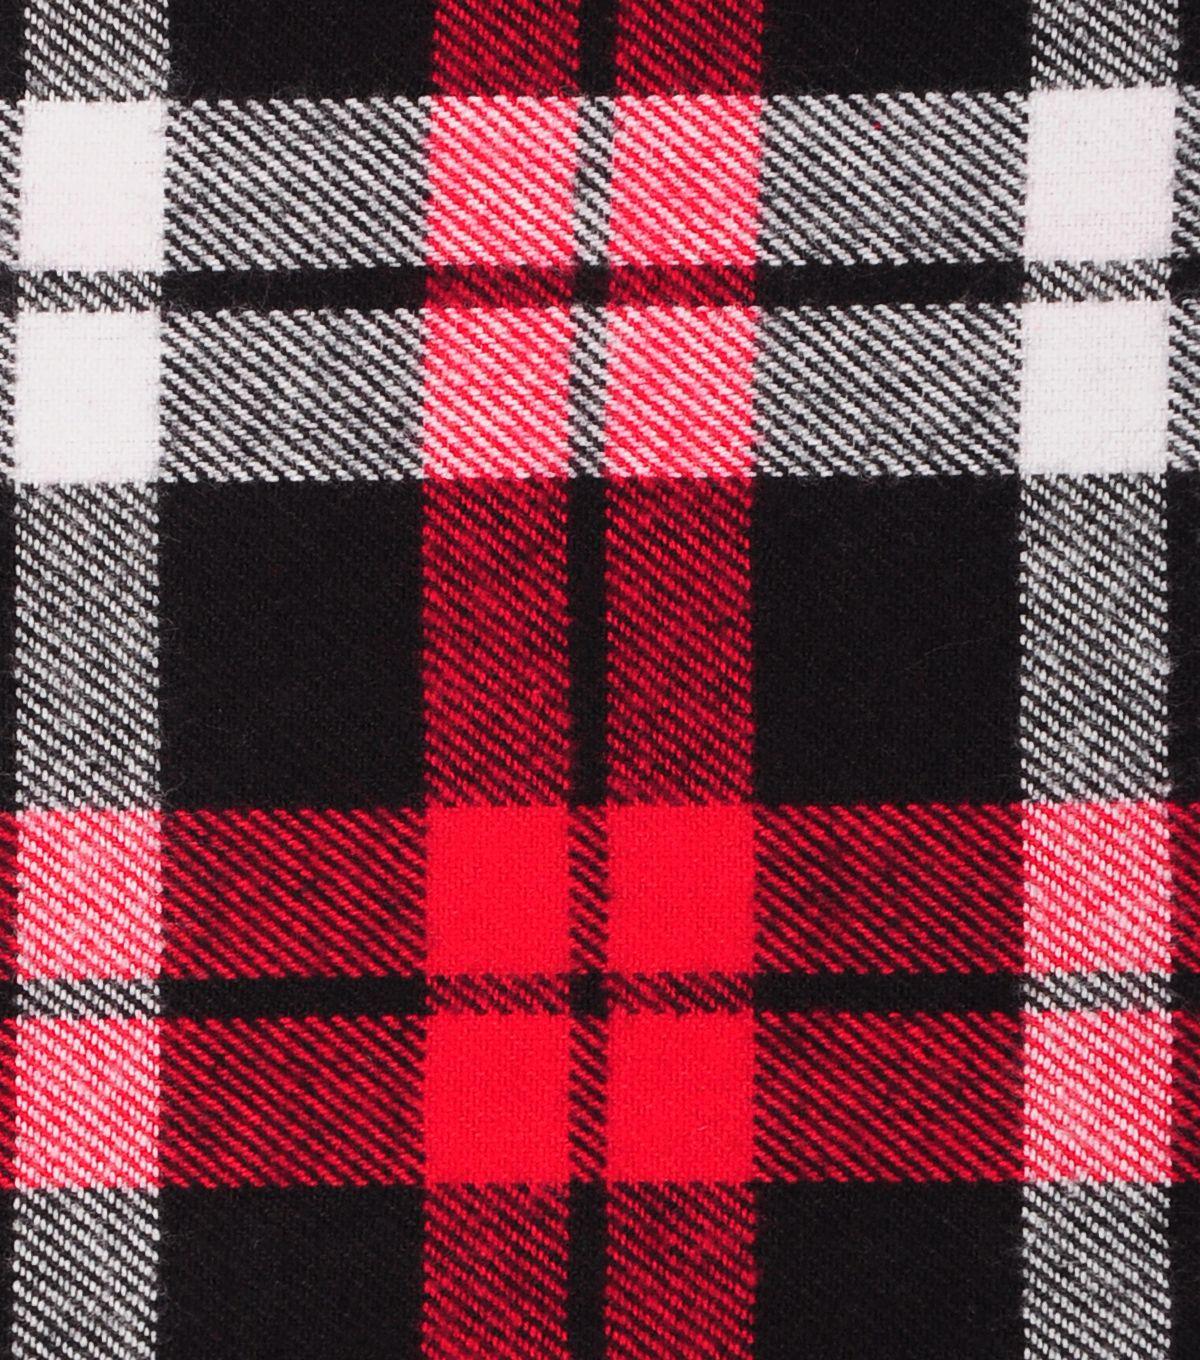 Red White Square Logo - Plaiditudes Brushed Cotton Fabric Red, White & Black Square Plaid